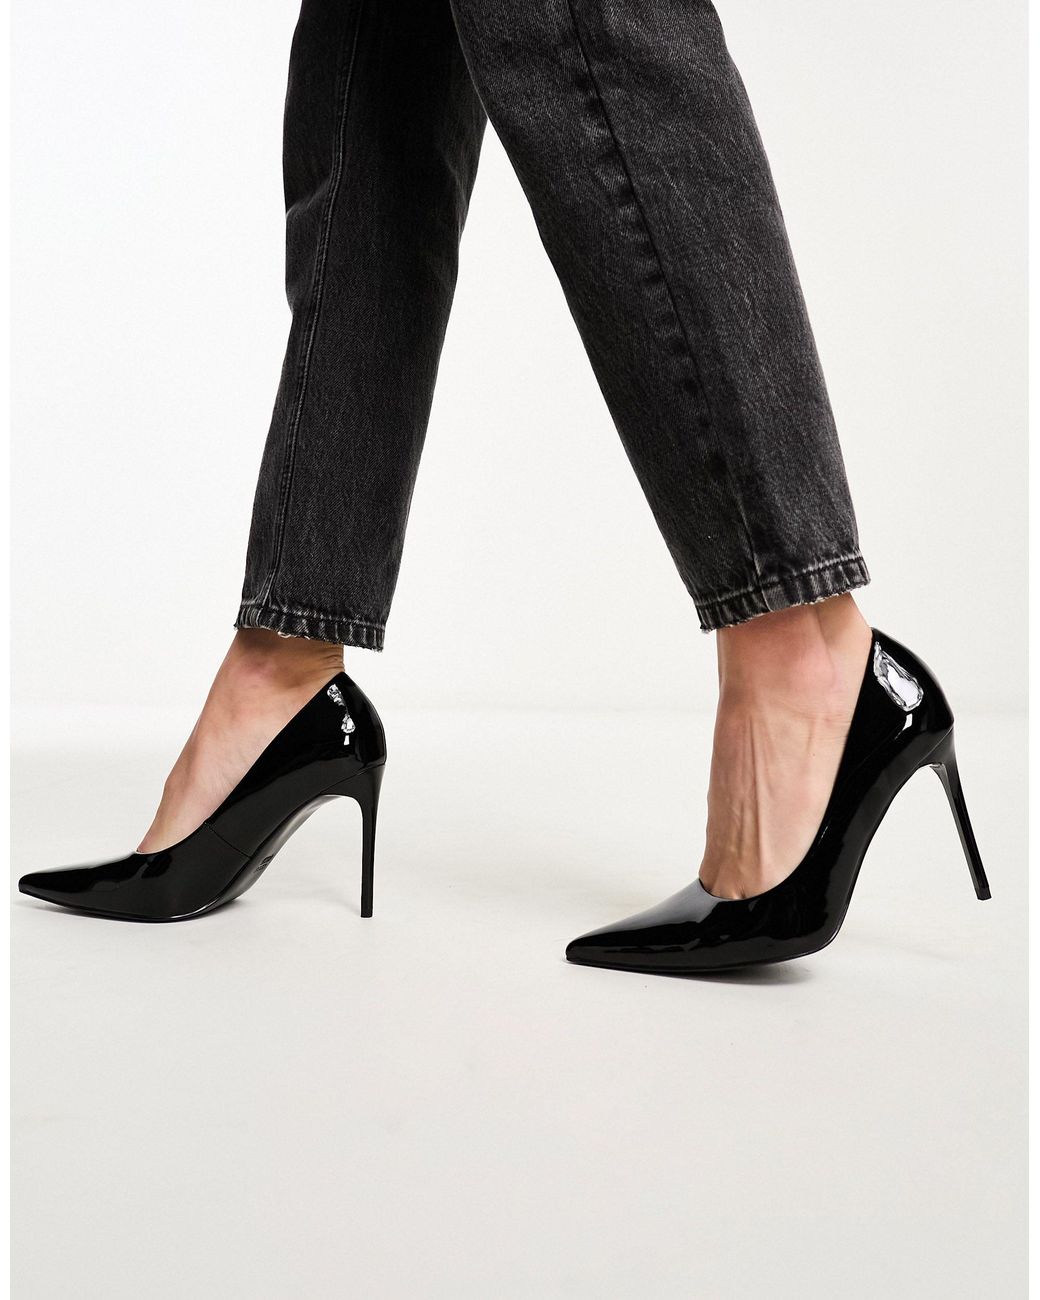 ASOS DESIGN Pronto platform high heeled shoes in black | ASOS